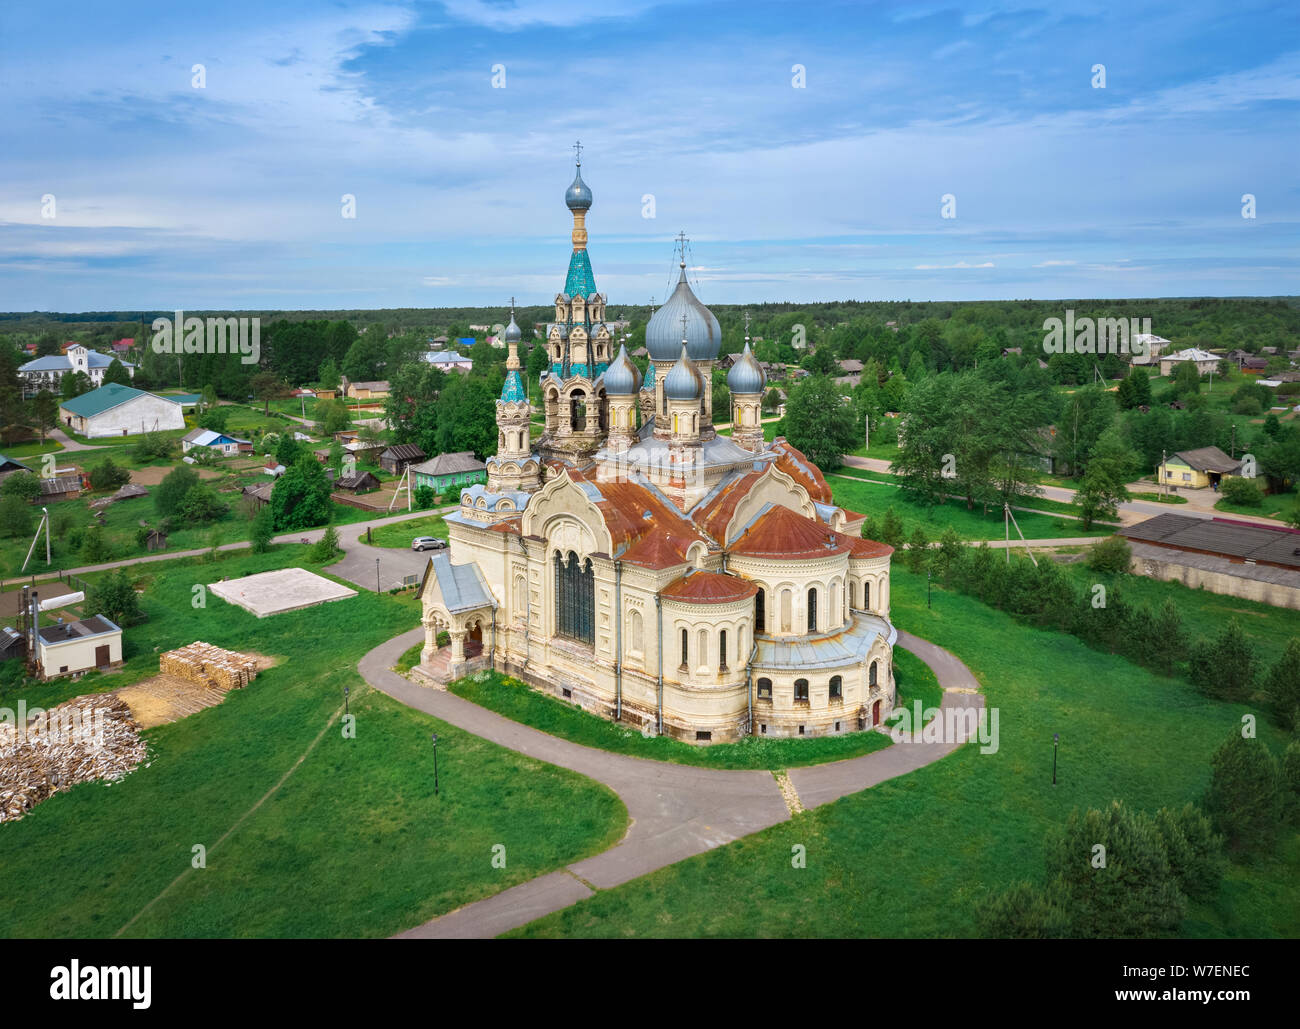 Russian Revival architecture style church in Kukoboy, Yaroslavl Oblast, Russia Stock Photo